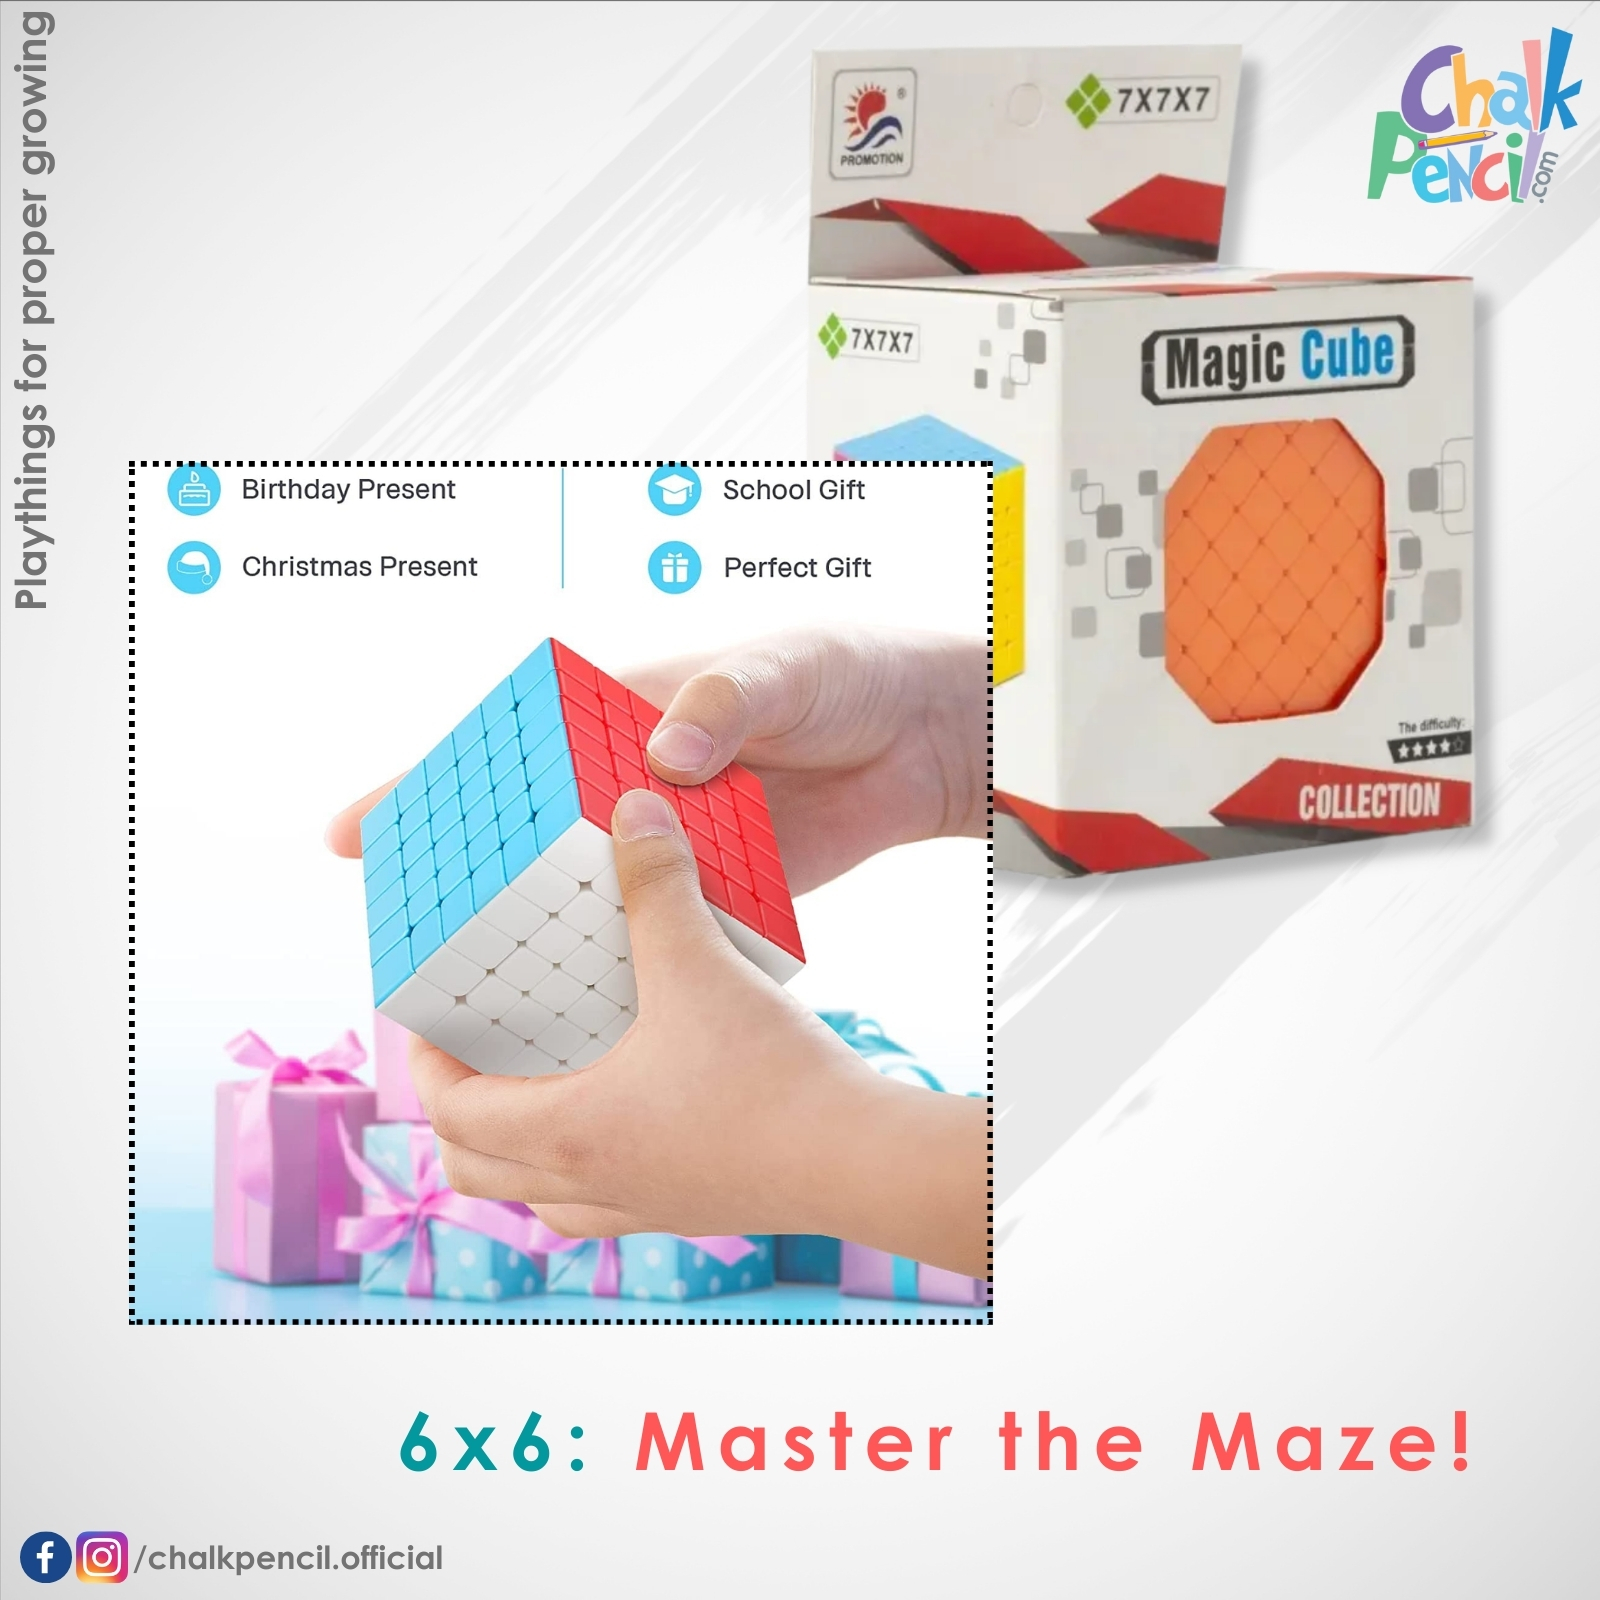 6x6 Exclusive 66mm Rubik's Cube